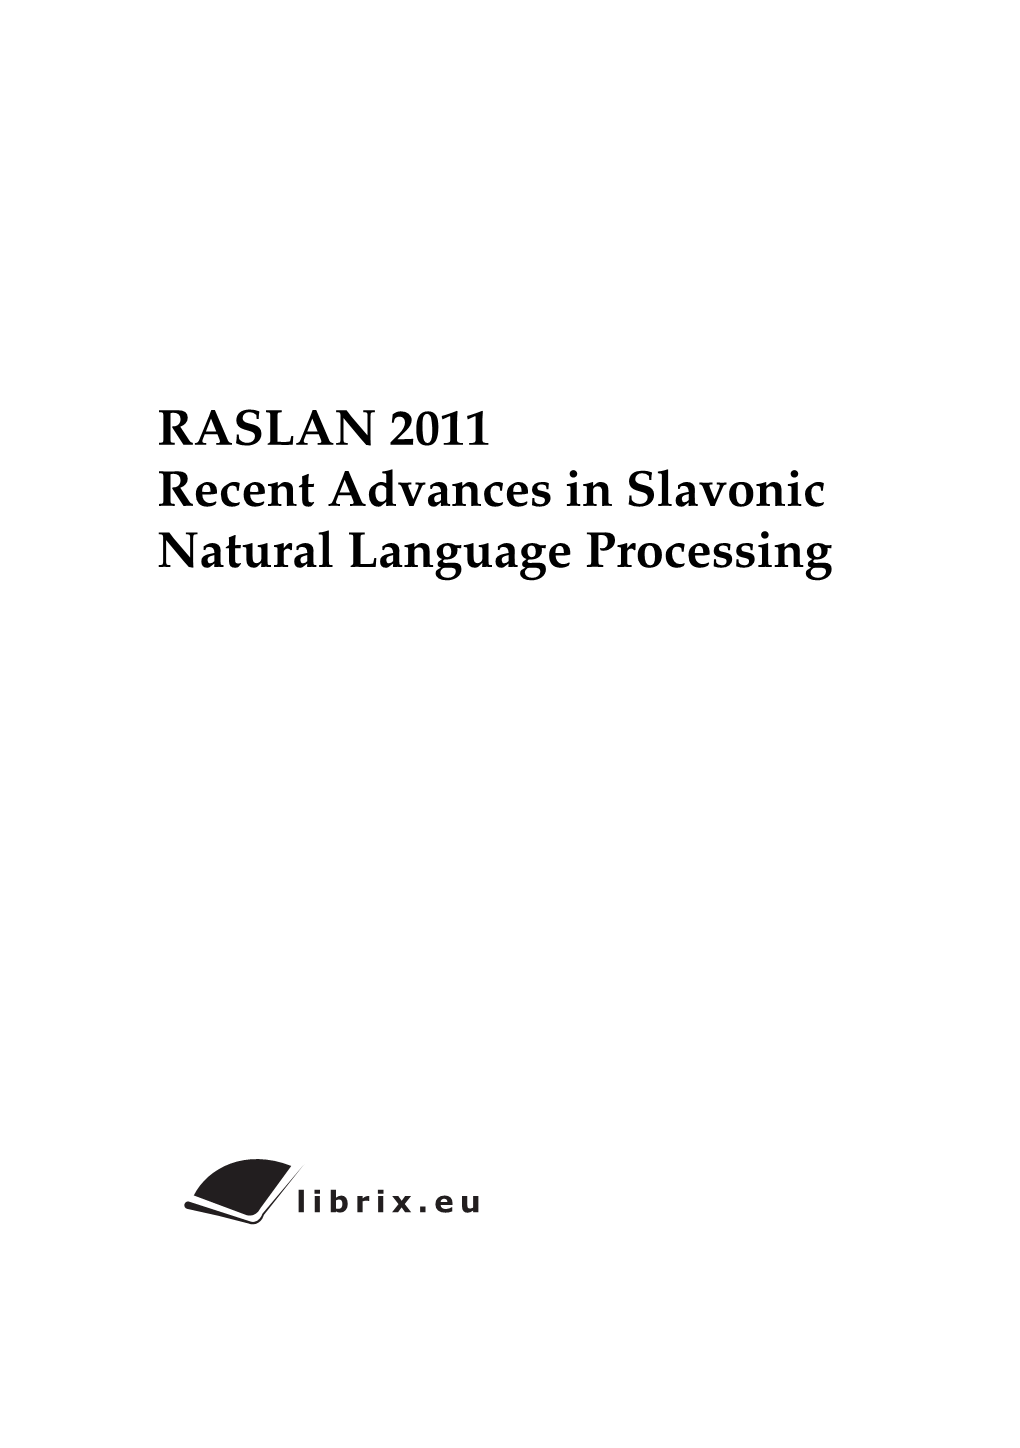 RASLAN 2011 Recent Advances in Slavonic Natural Language Processing